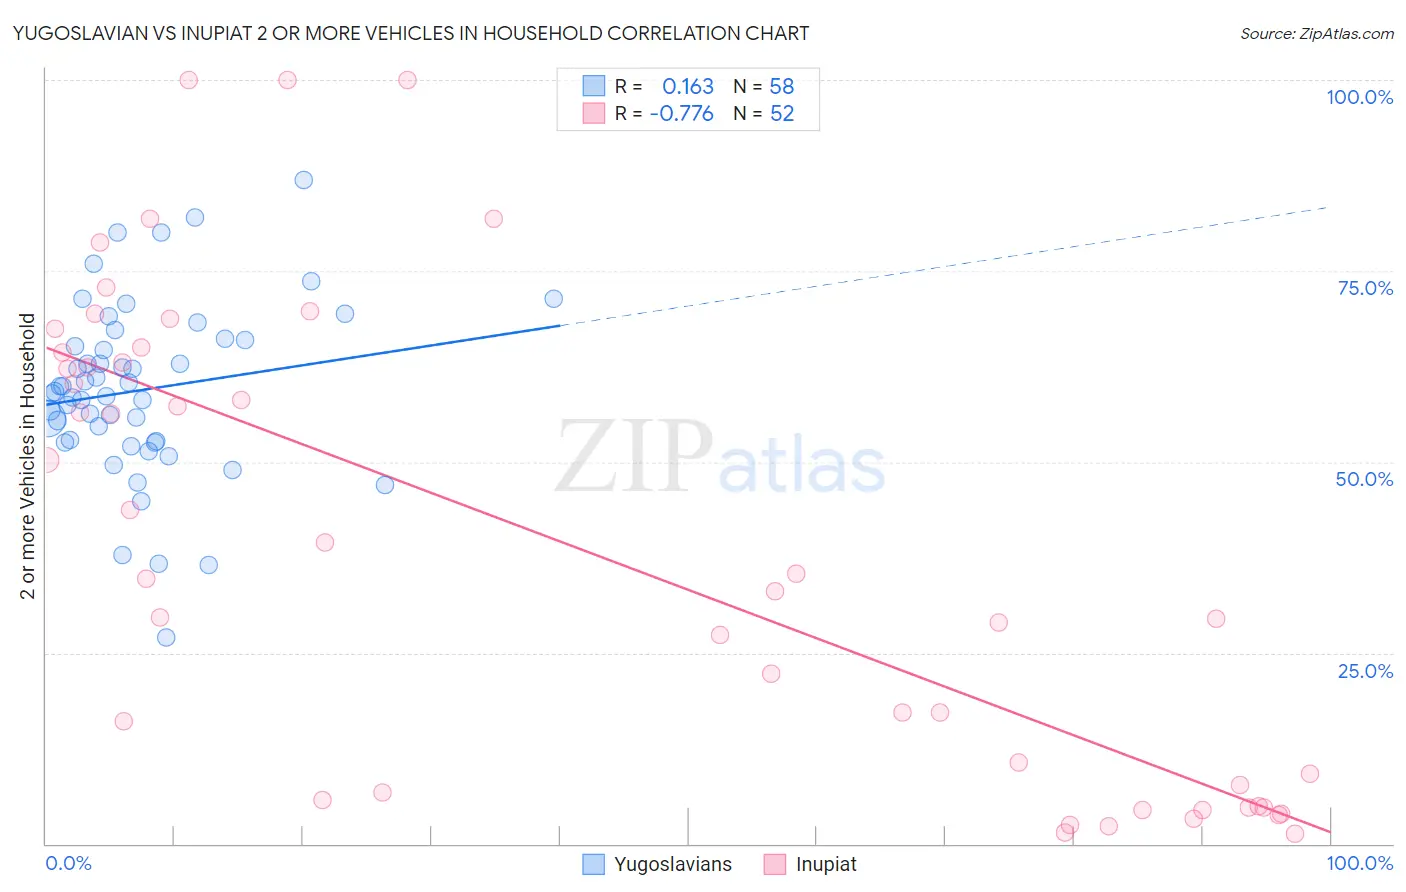 Yugoslavian vs Inupiat 2 or more Vehicles in Household